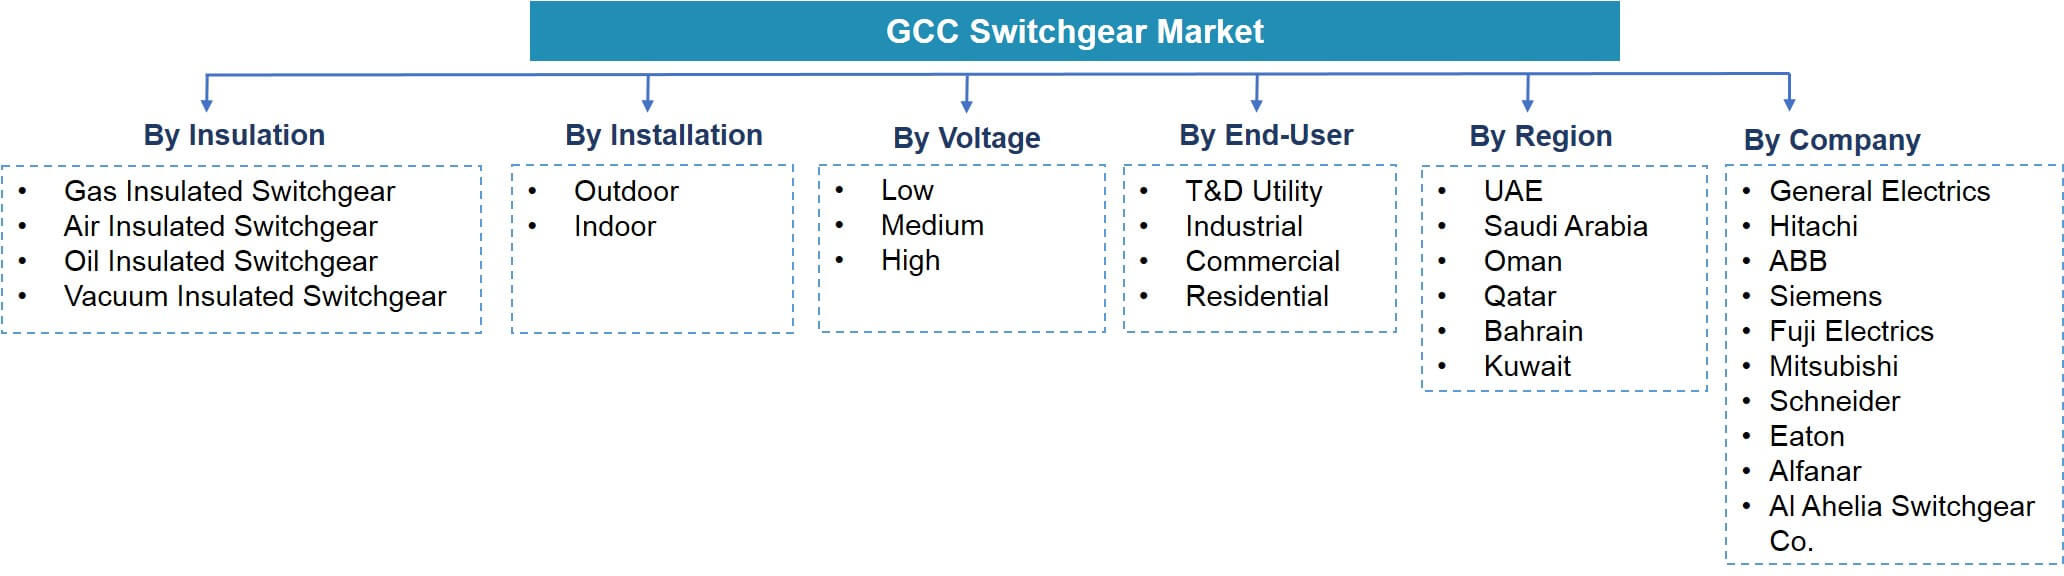 GCC Switchgear Market Segmentation